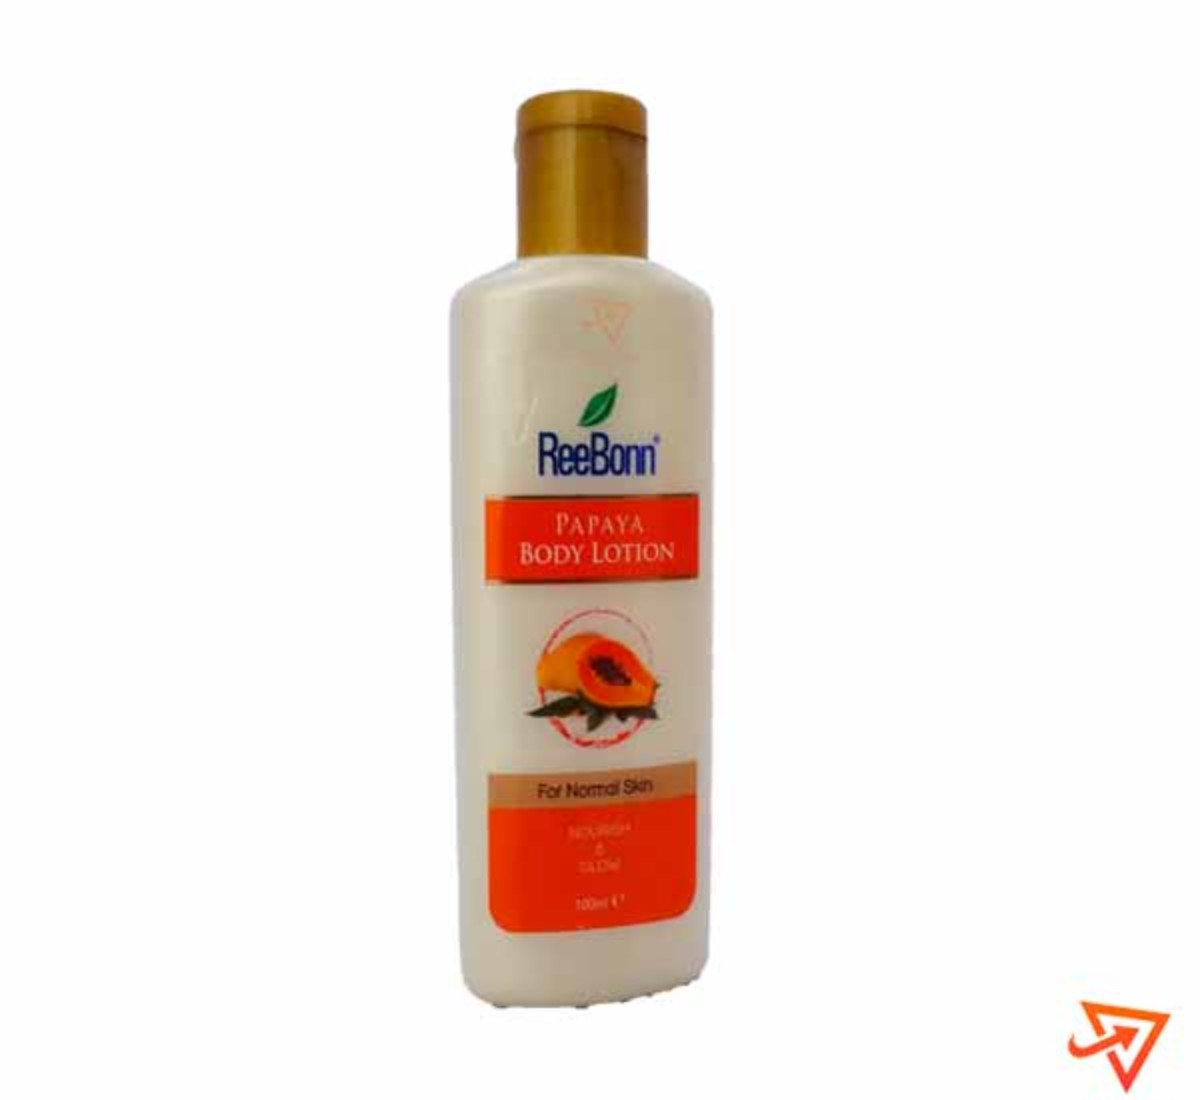 Clicker product 100ml REEBONN Papaya Body lotion 1033